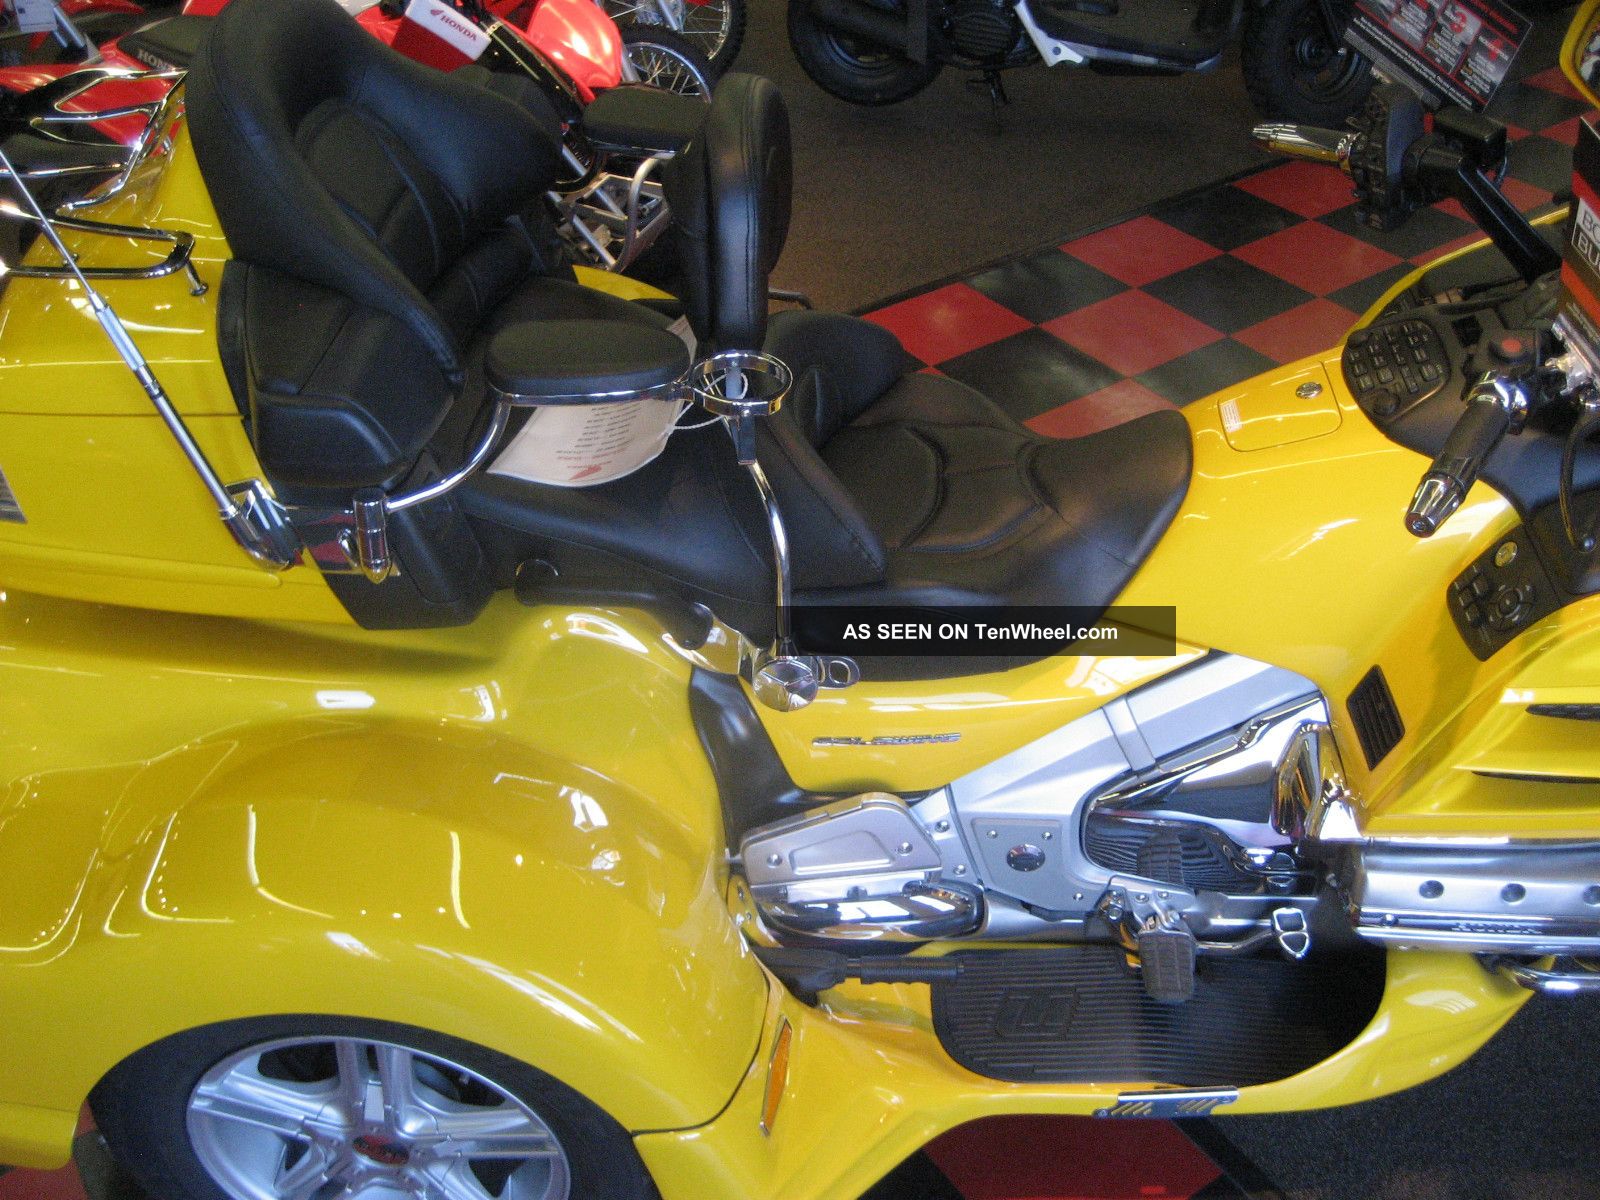 Honda goldwing four-wheeler conversion